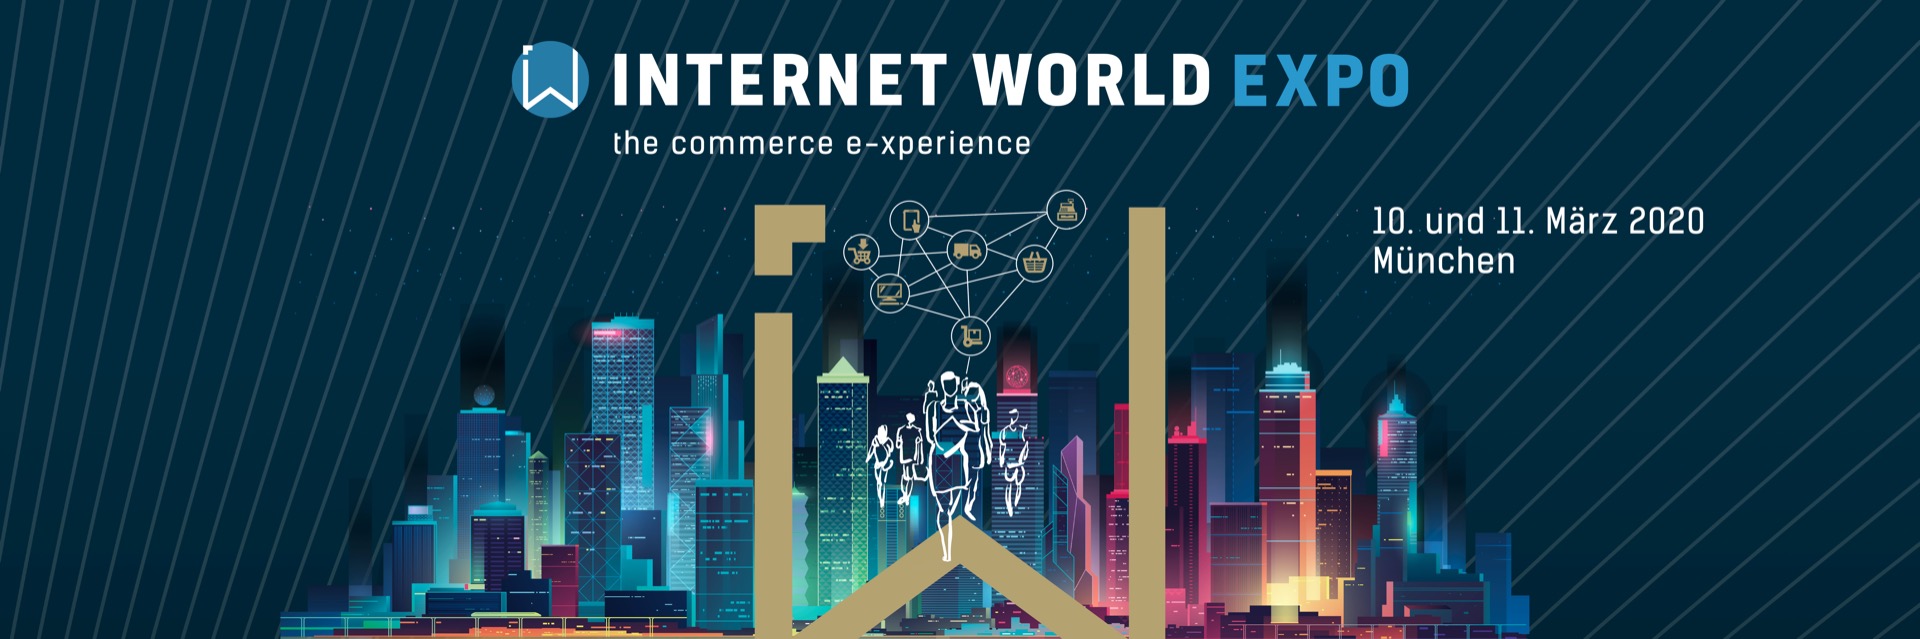 Internet World EXPO